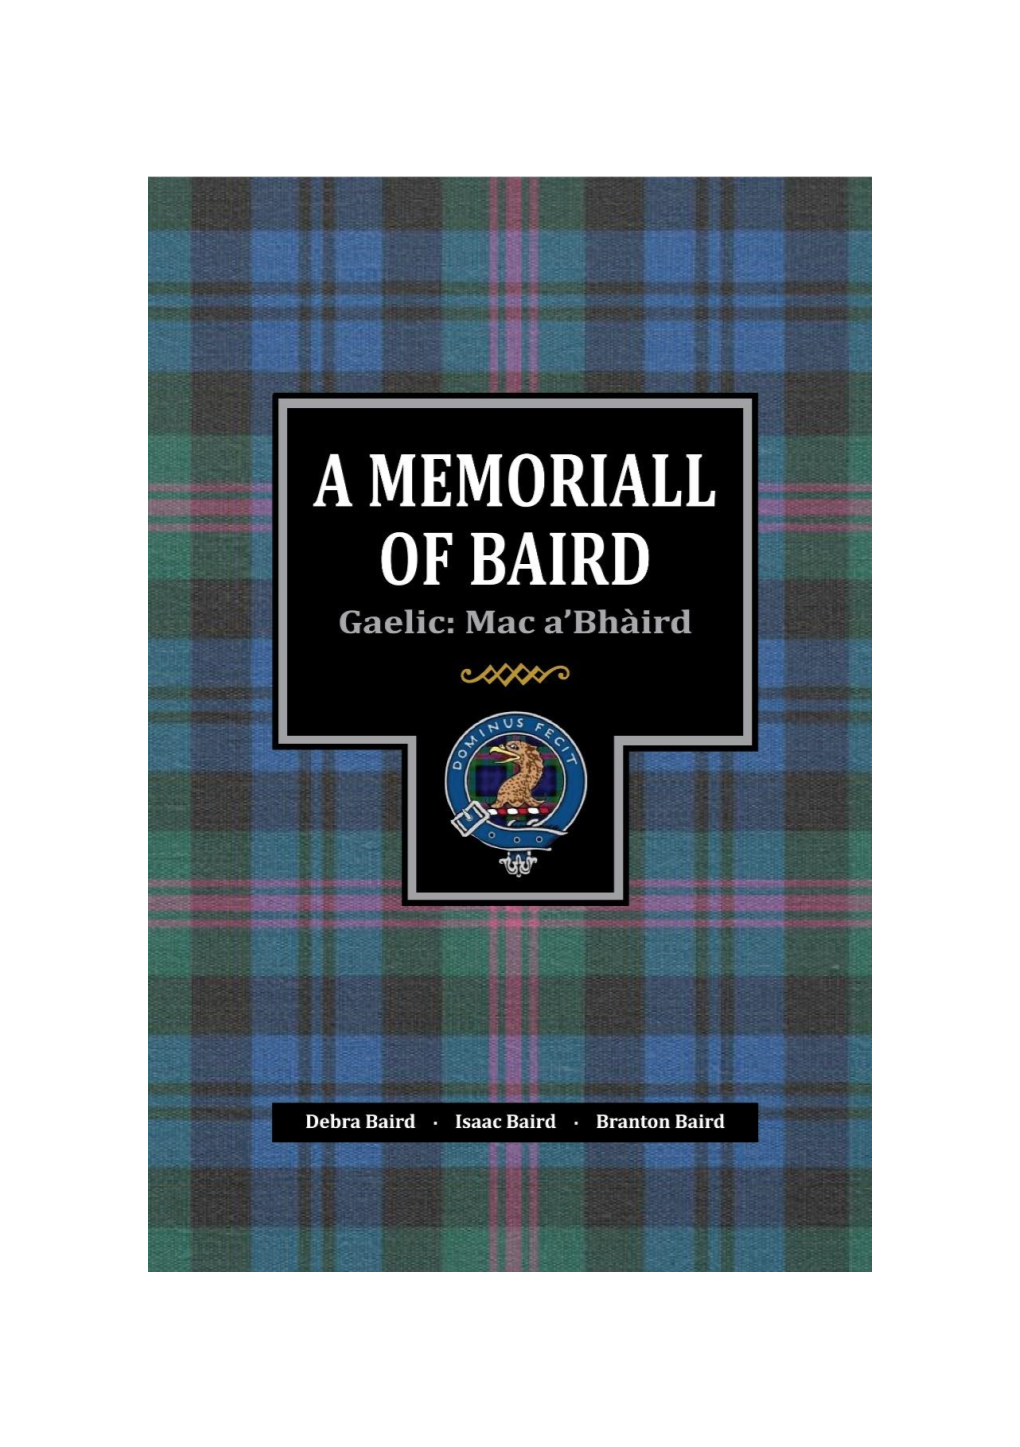 A Memoriall of Baird